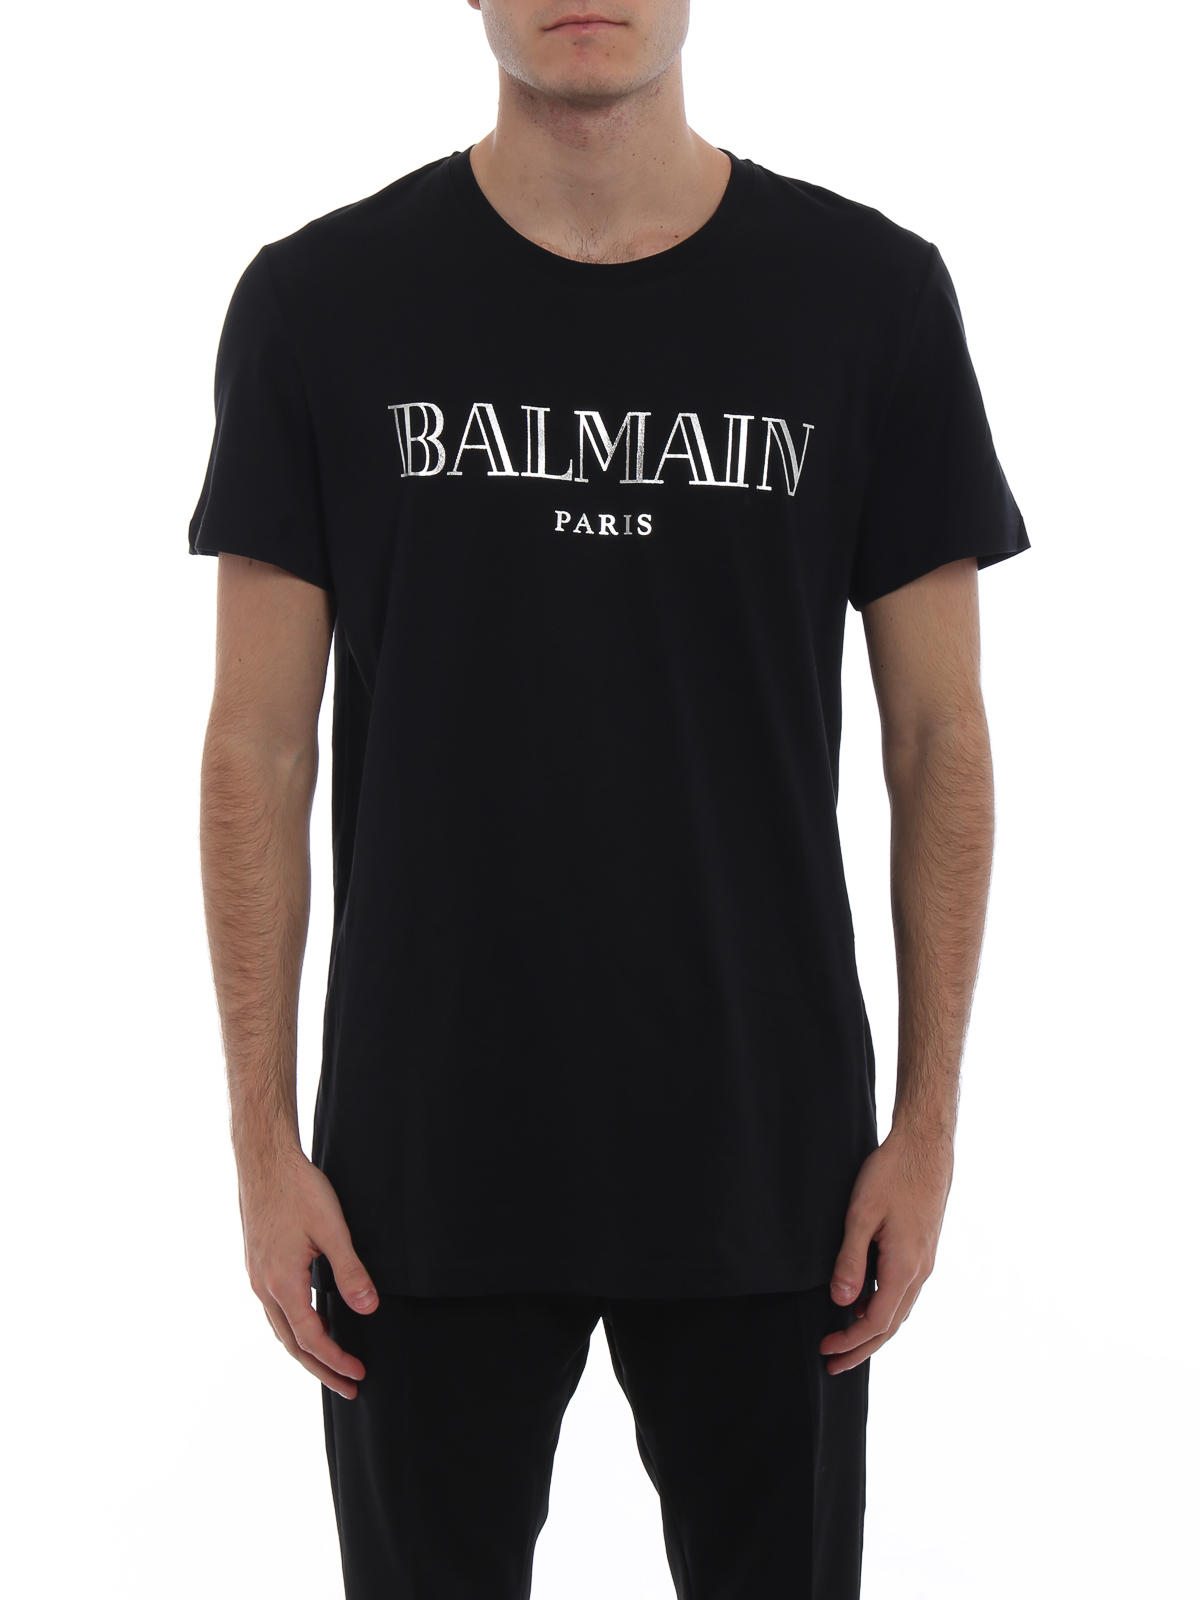 grå elektronisk Læsbarhed Tシャツ Balmain - Tシャツ - Balmain Paris - W8H8601I2581766